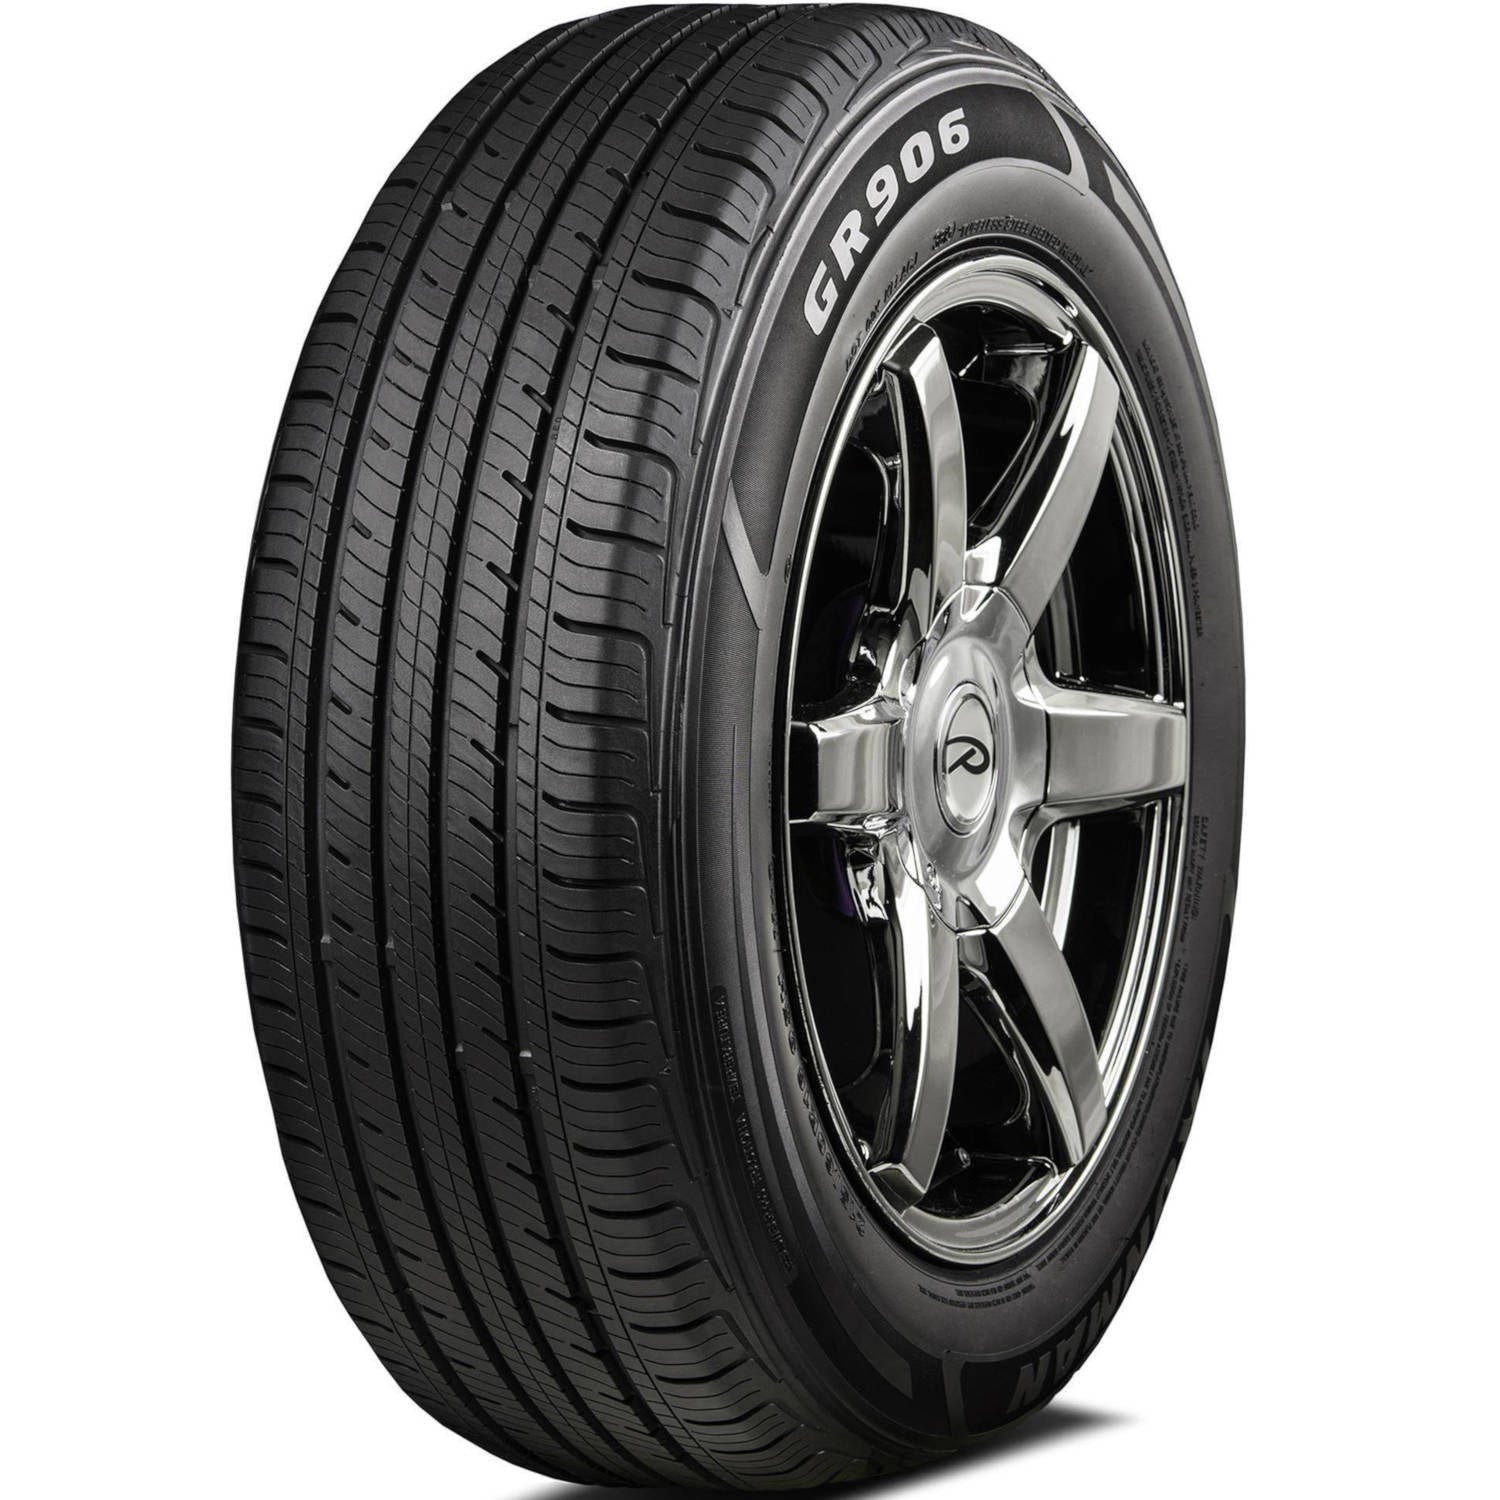 IRONMAN GR906 225/70R15 (27.4X8.9R 15) Tires